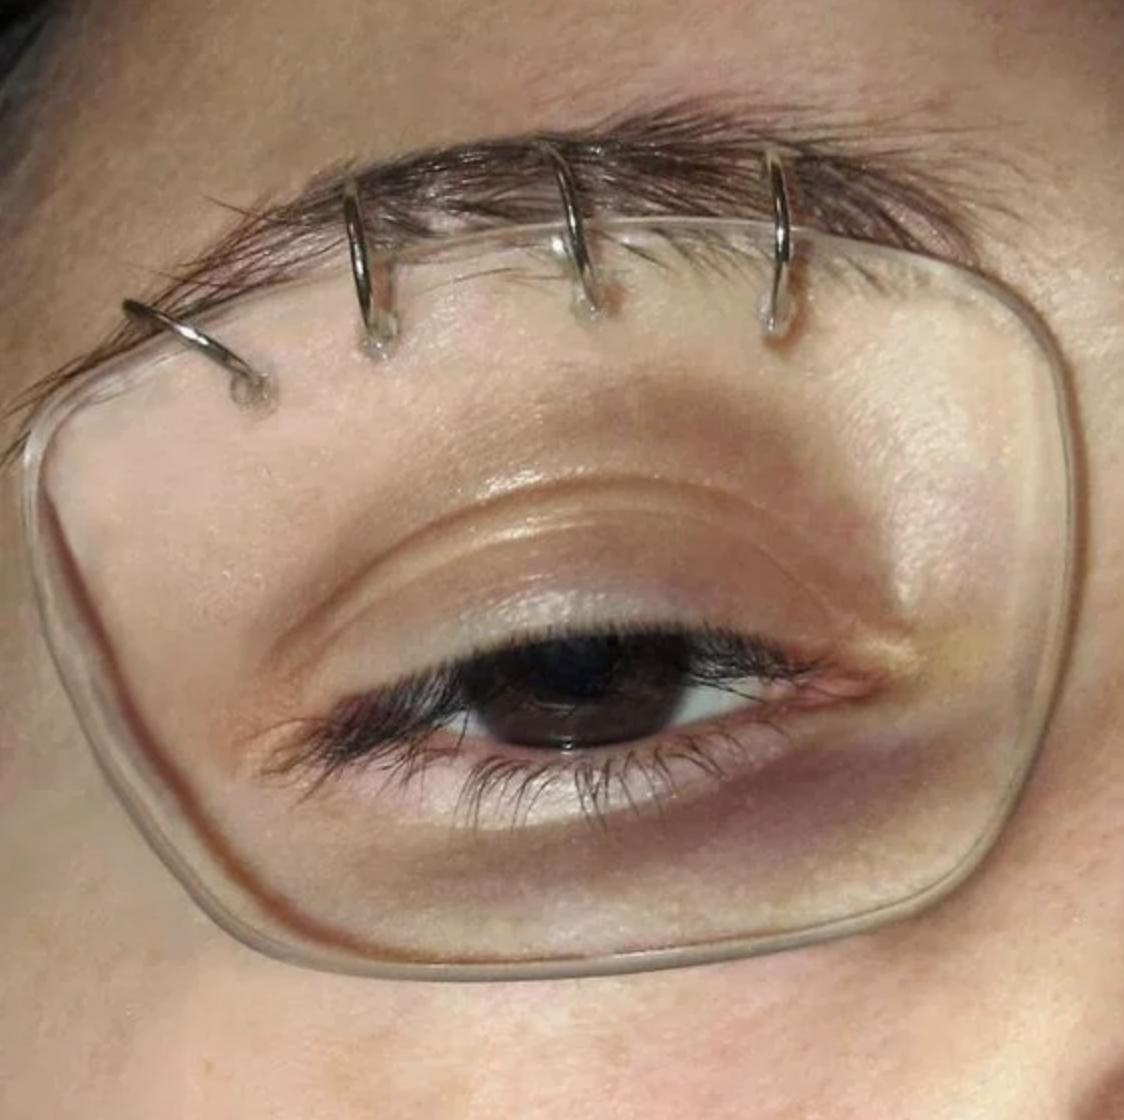 eyebrow piercings that hold a eye glass lens